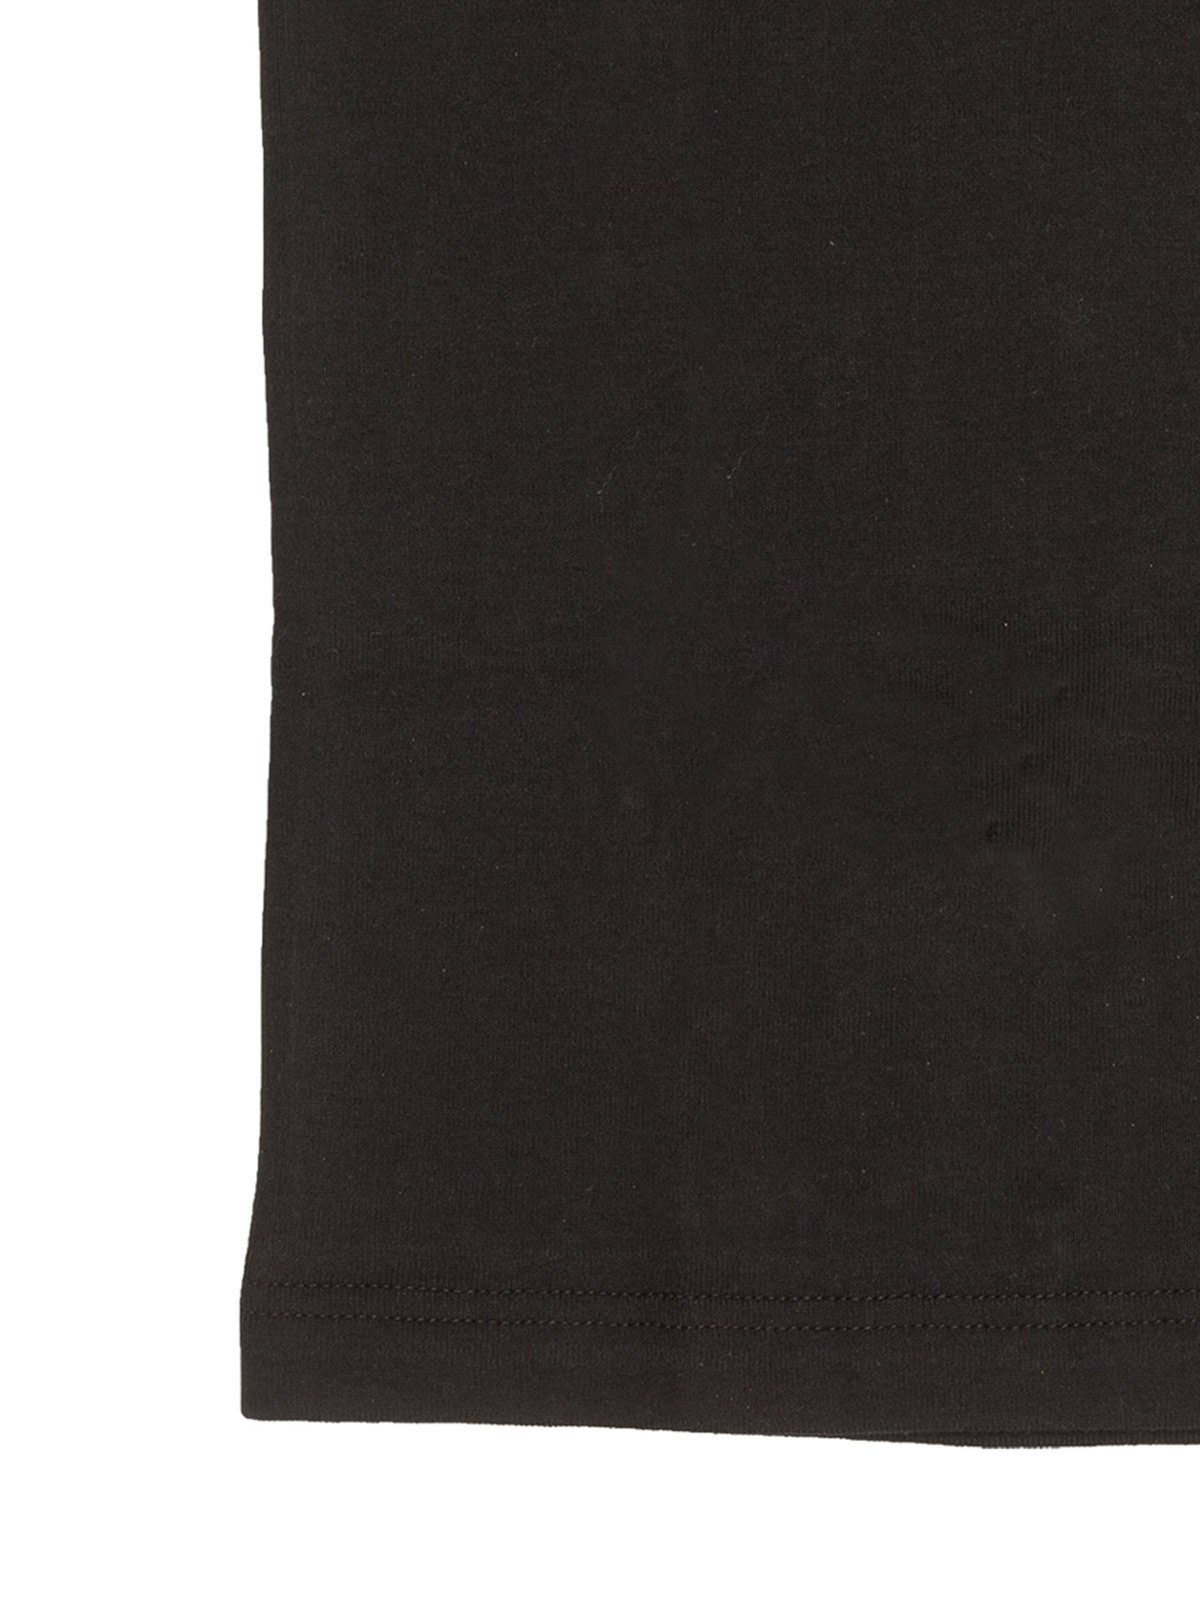 Sweety for Kids Unterhemd Feinripp 1-St) Markenqualität schwarz (Stück, Achselhemd Knaben hohe